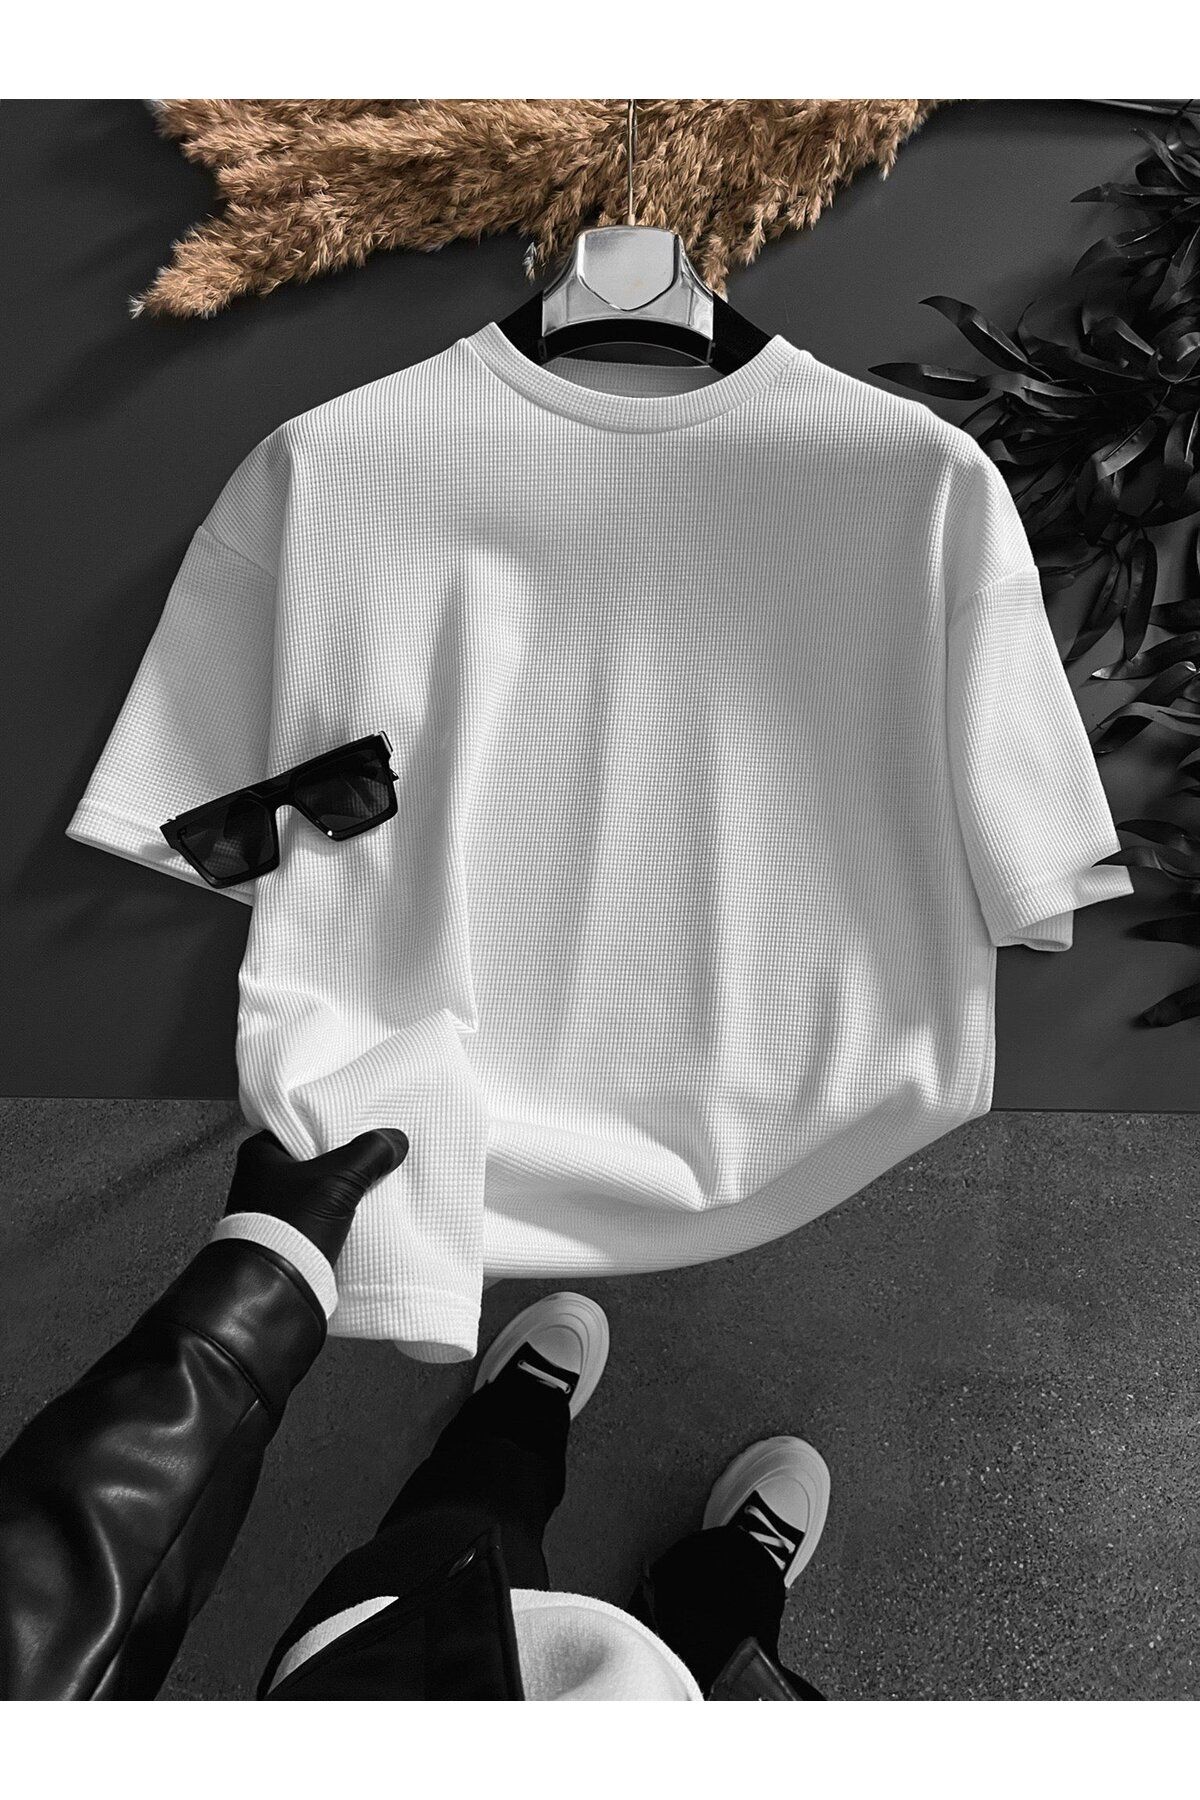 ablukaonline Long Fit Dokulu Basic T-shirt Beyaz